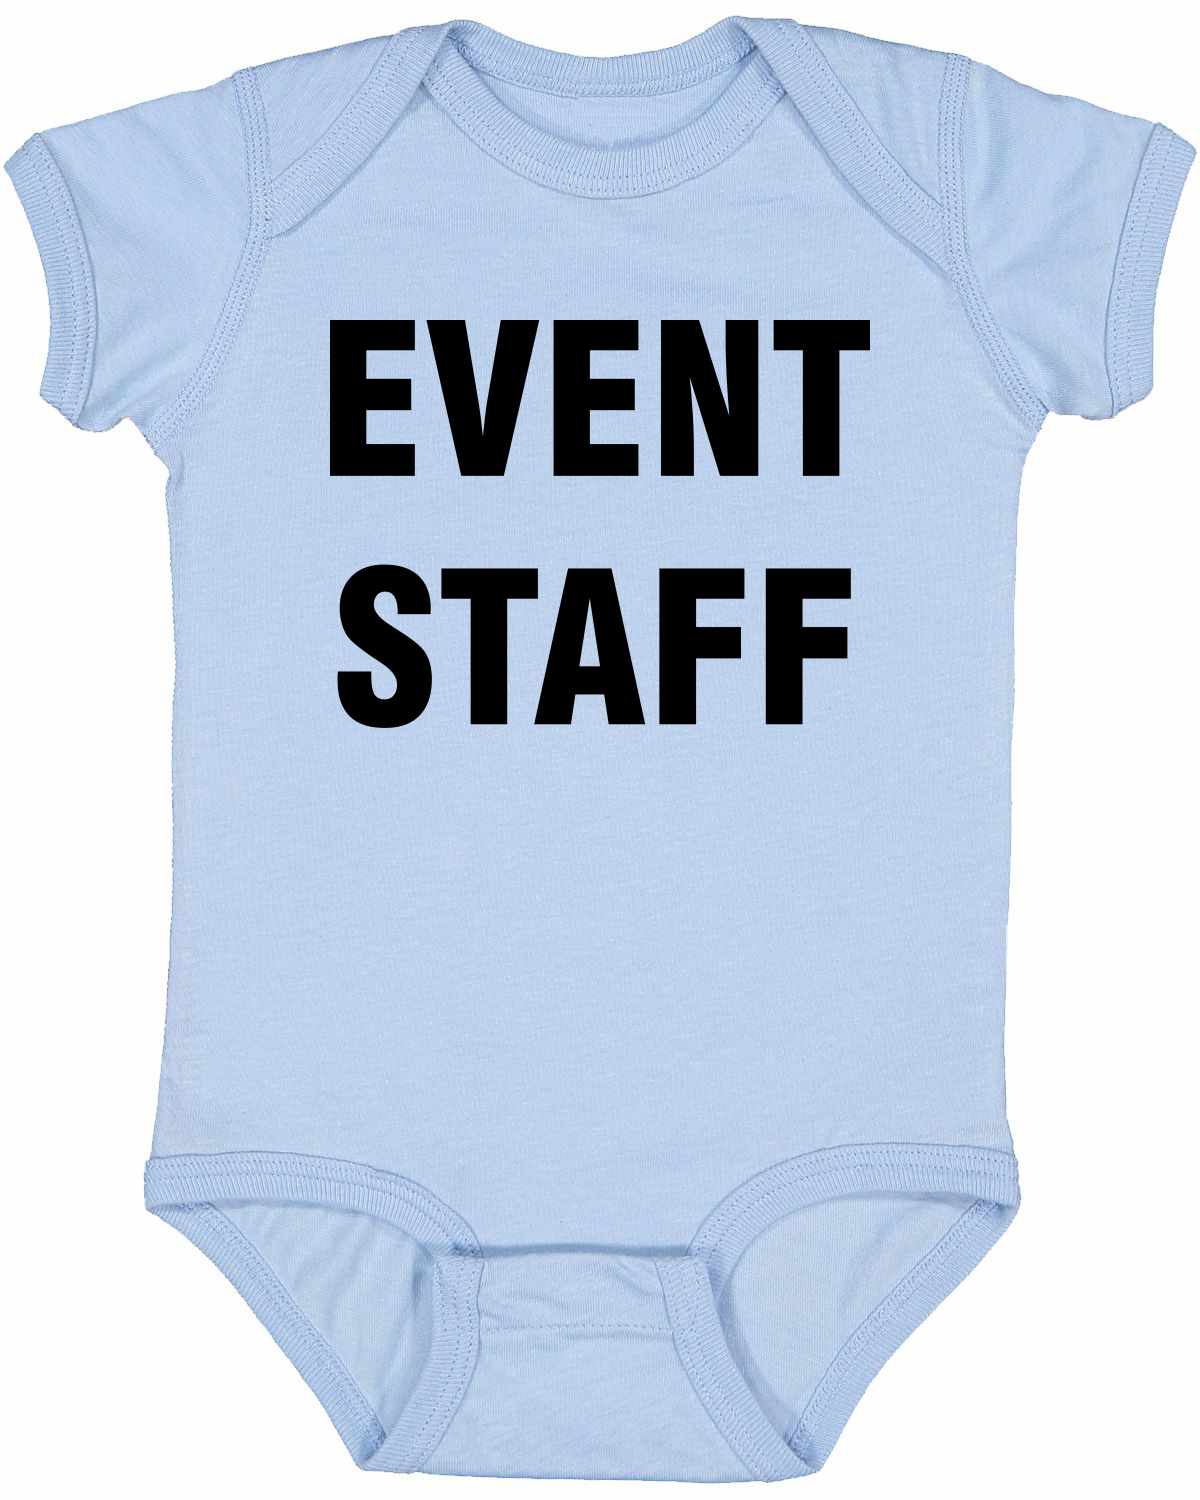 EVENT STAFF on Infant BodySuit